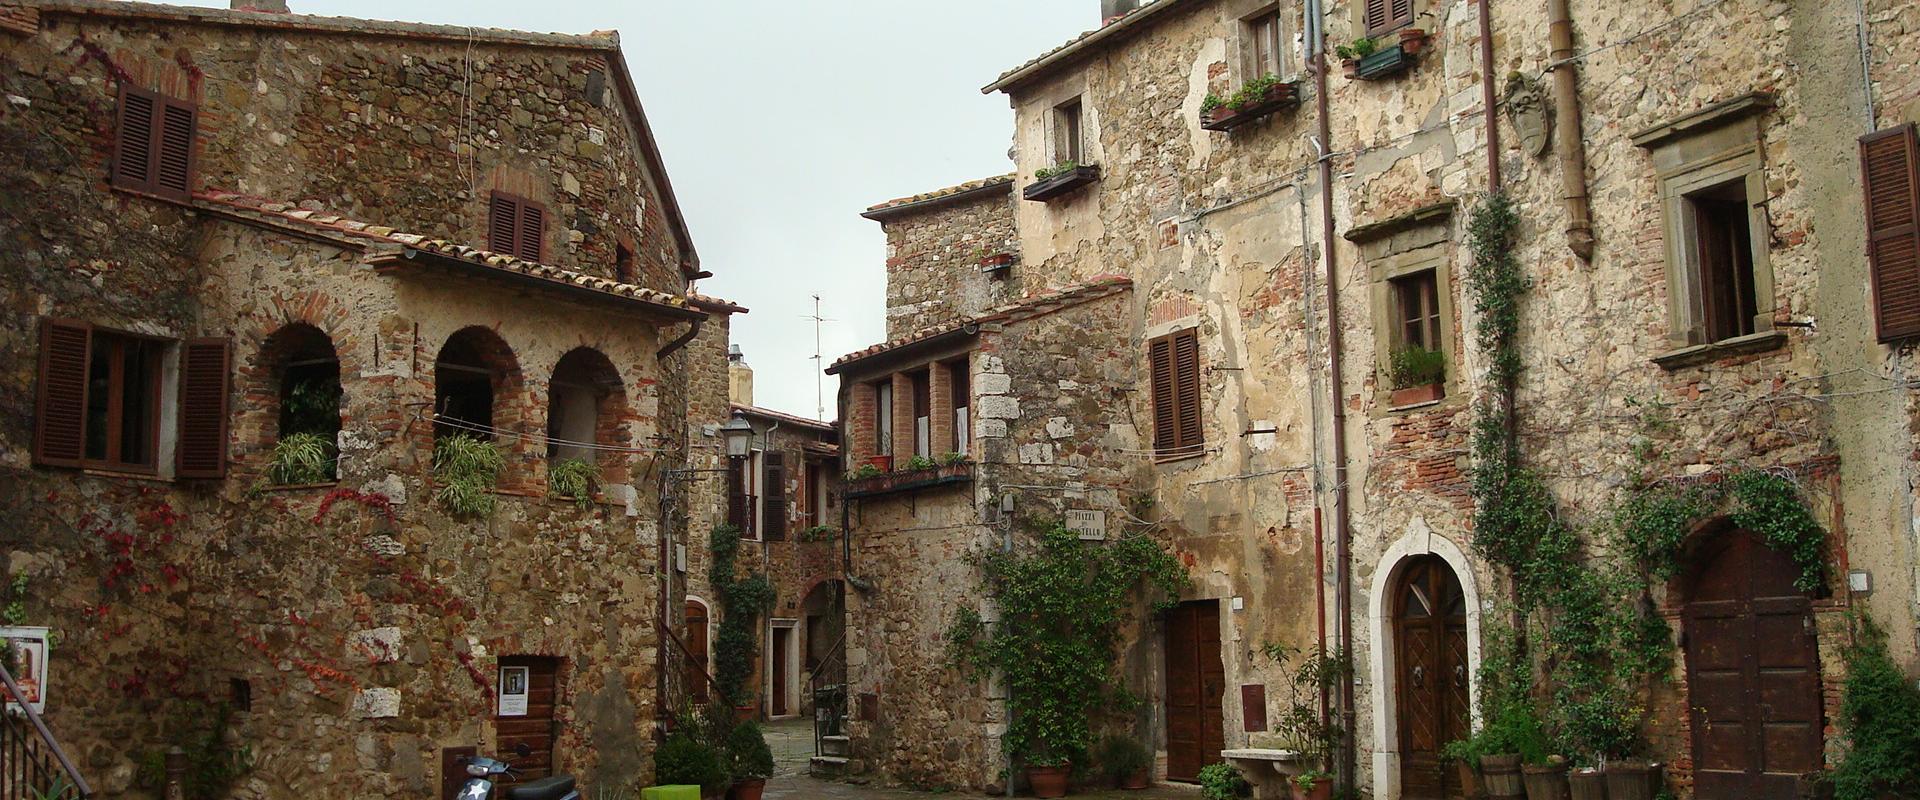 Montemerano Tuscany